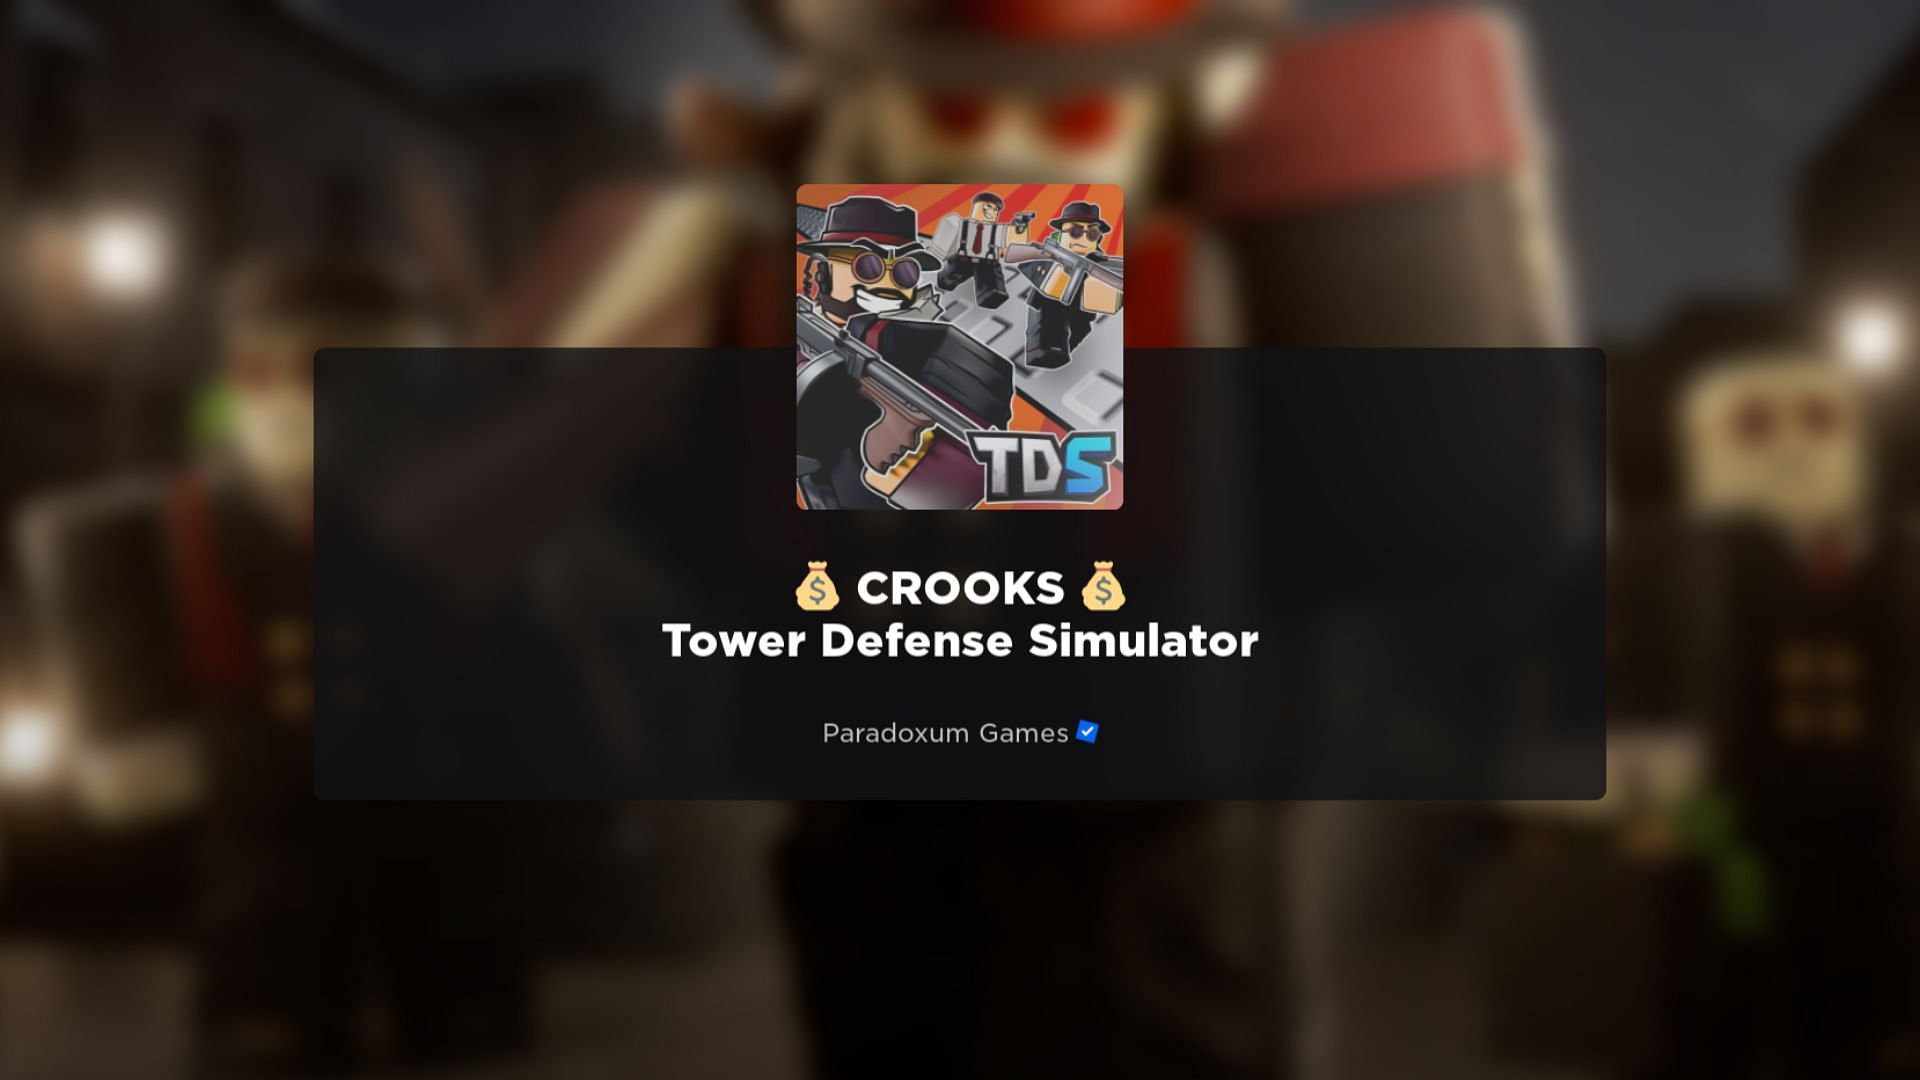 Crooks Boss update in Tower Defense Simulator